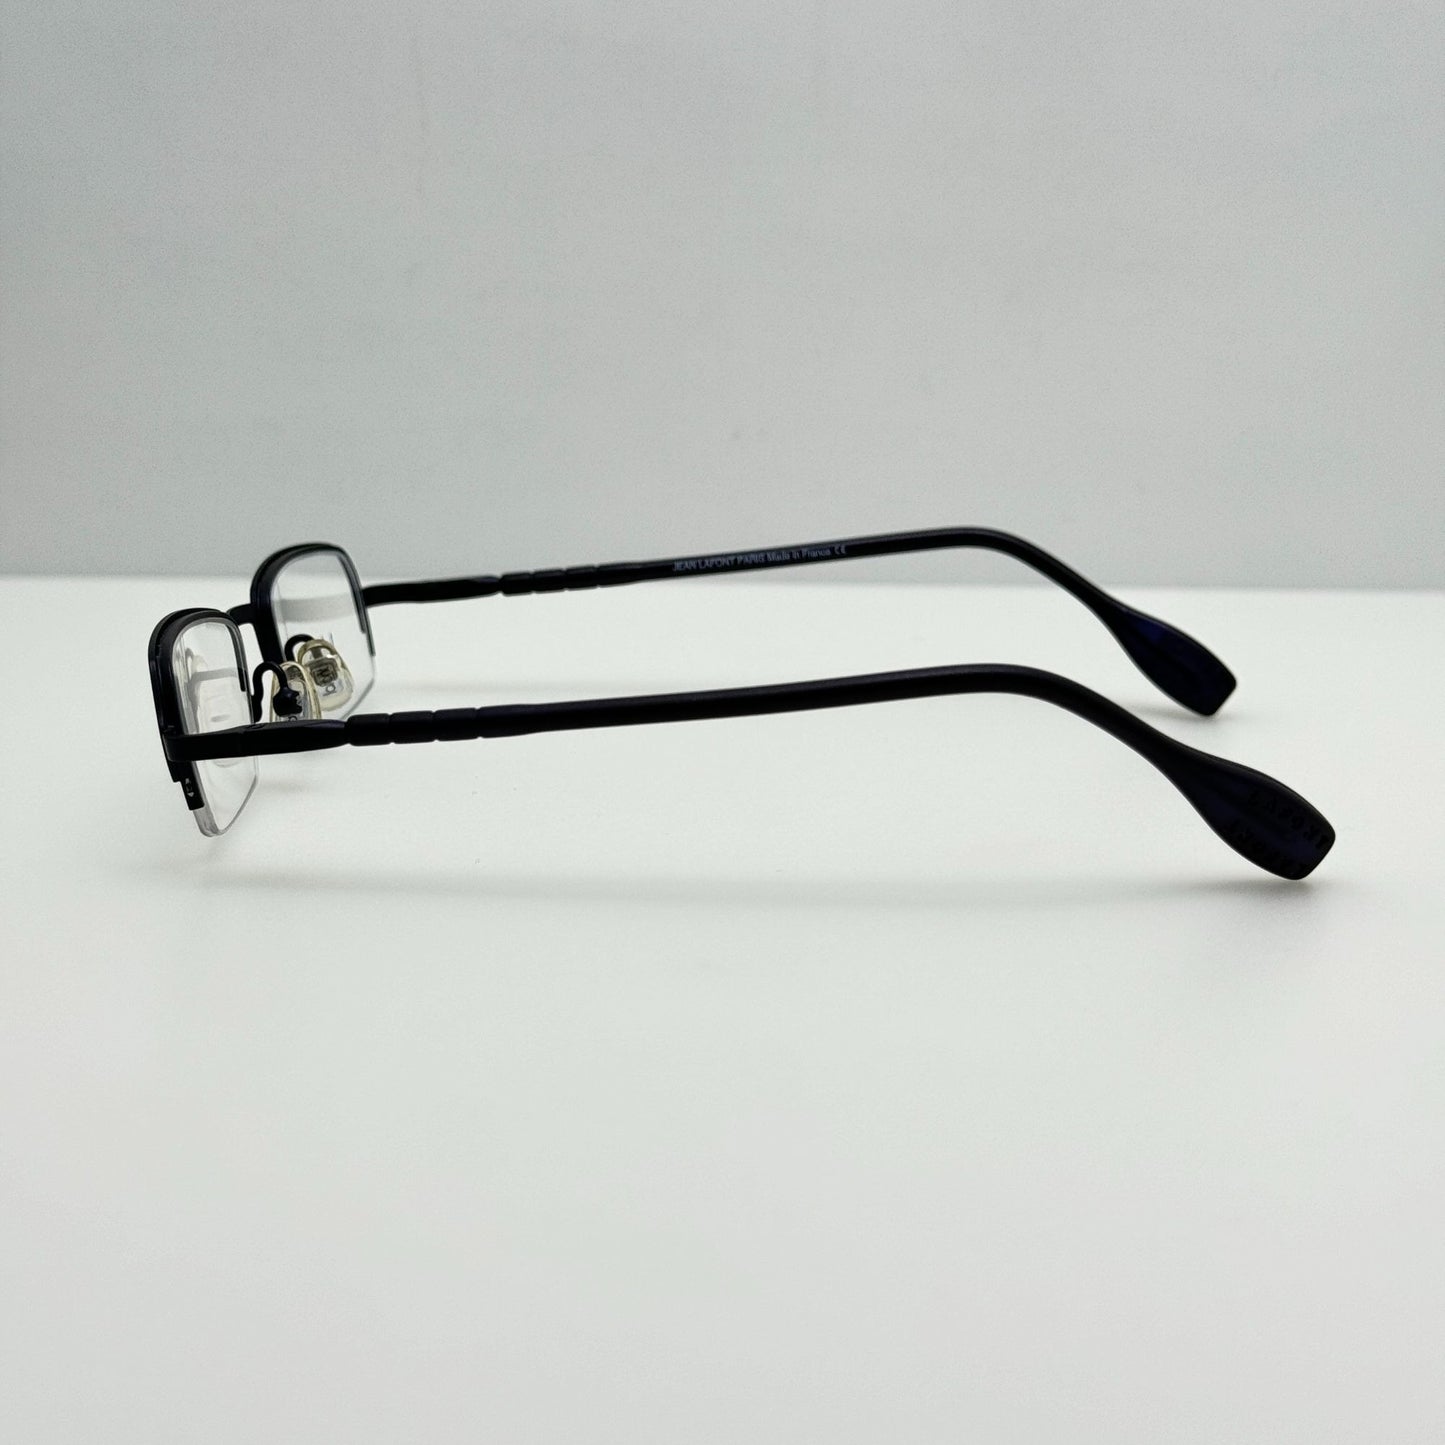 Jean Lafont Eyeglasses Eye Glasses Frames Carnaval 373 43-18-130